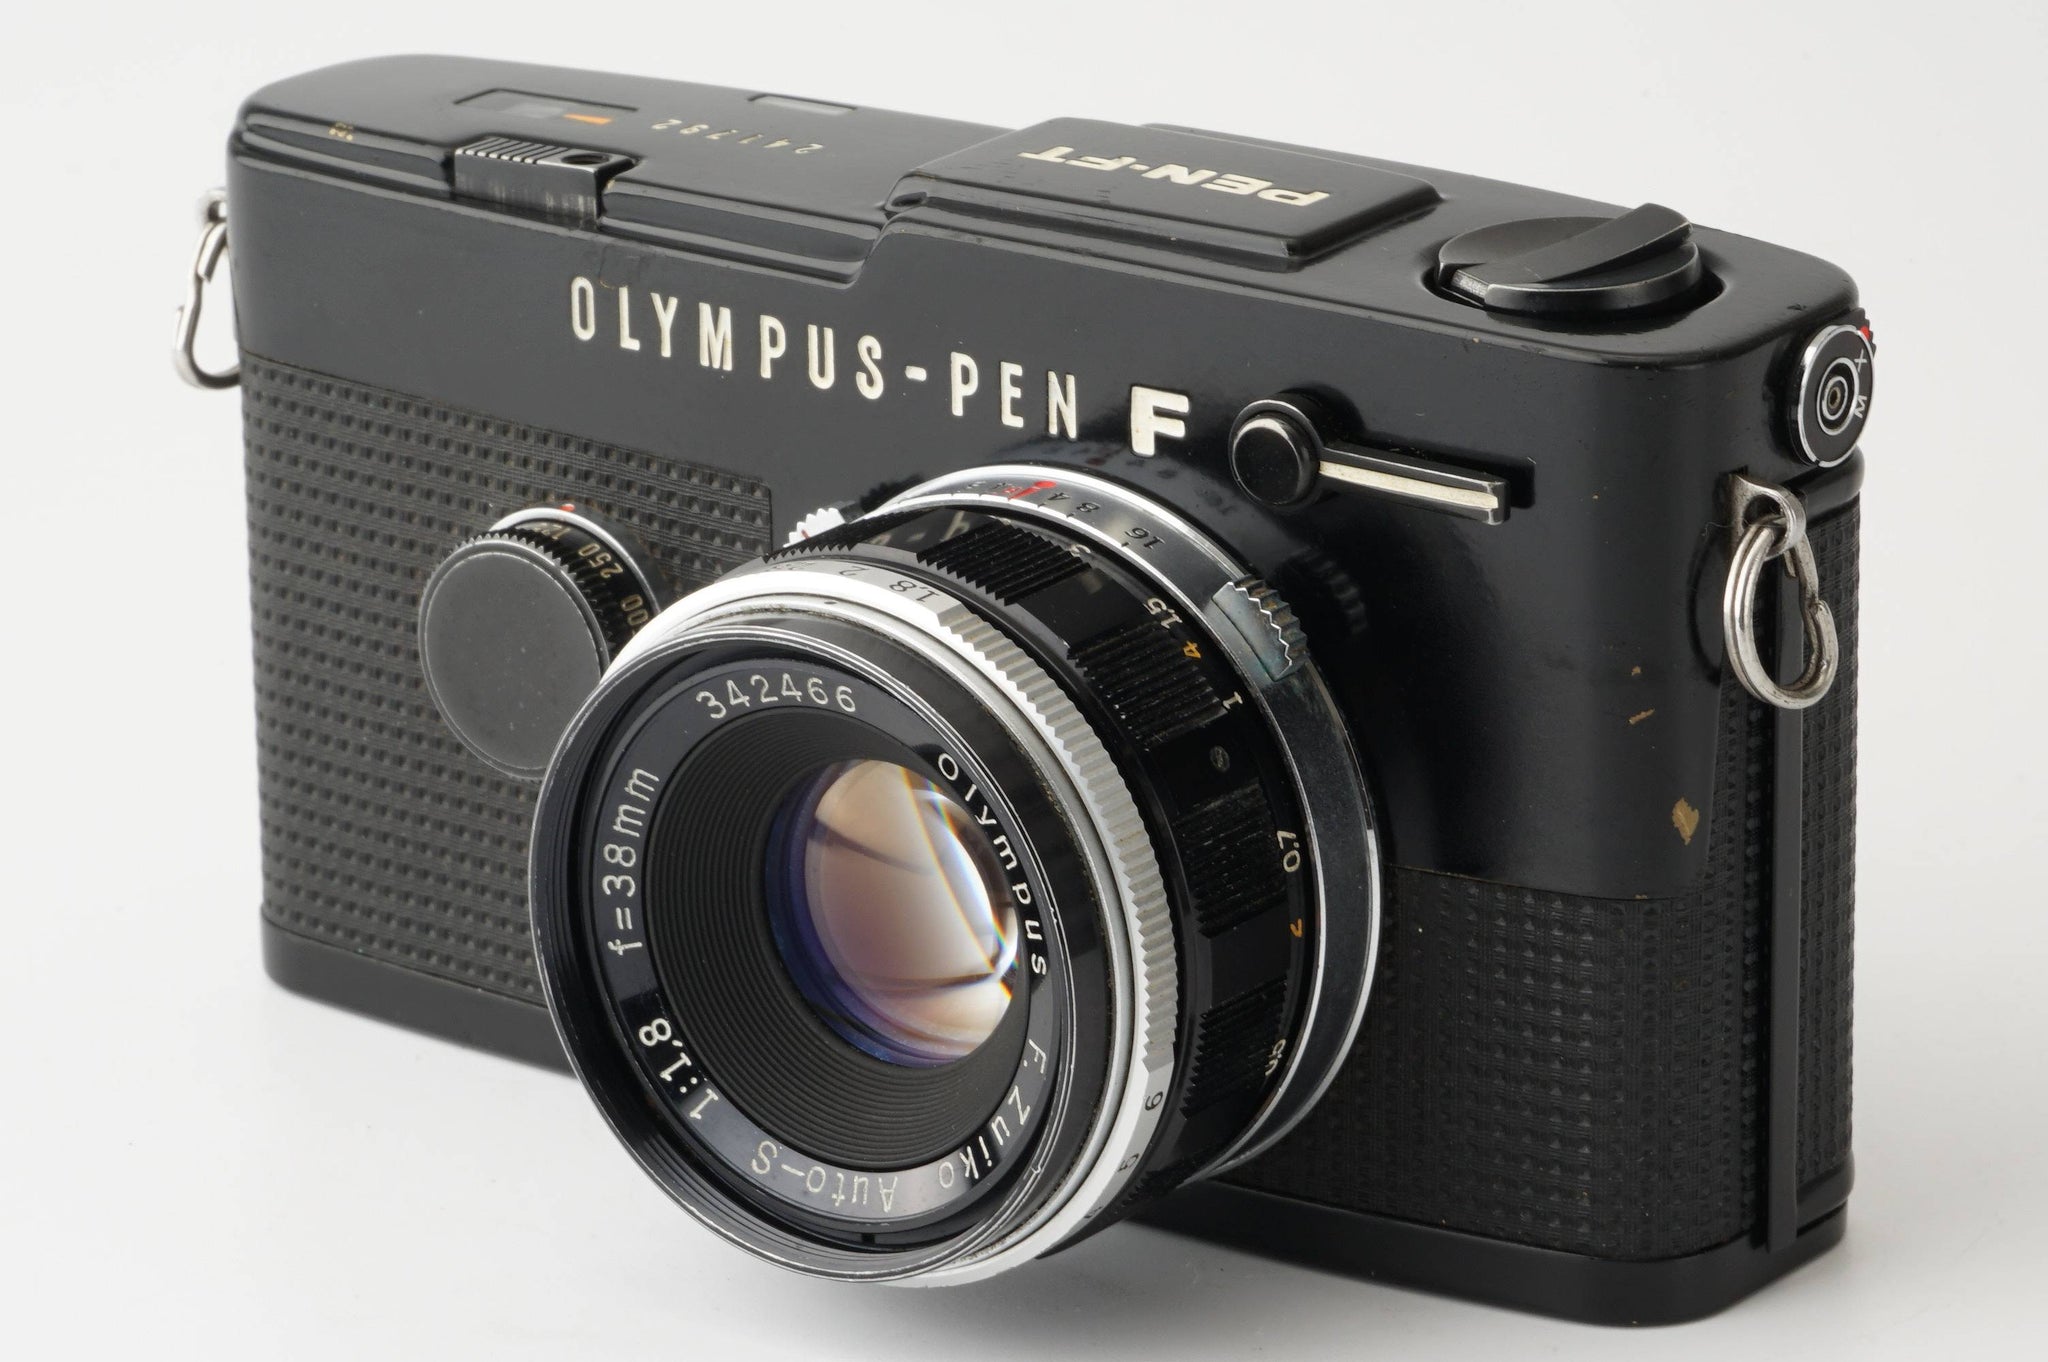 Olympus PEN FT + F.Zuiko 38mm F1.8 - フィルムカメラ